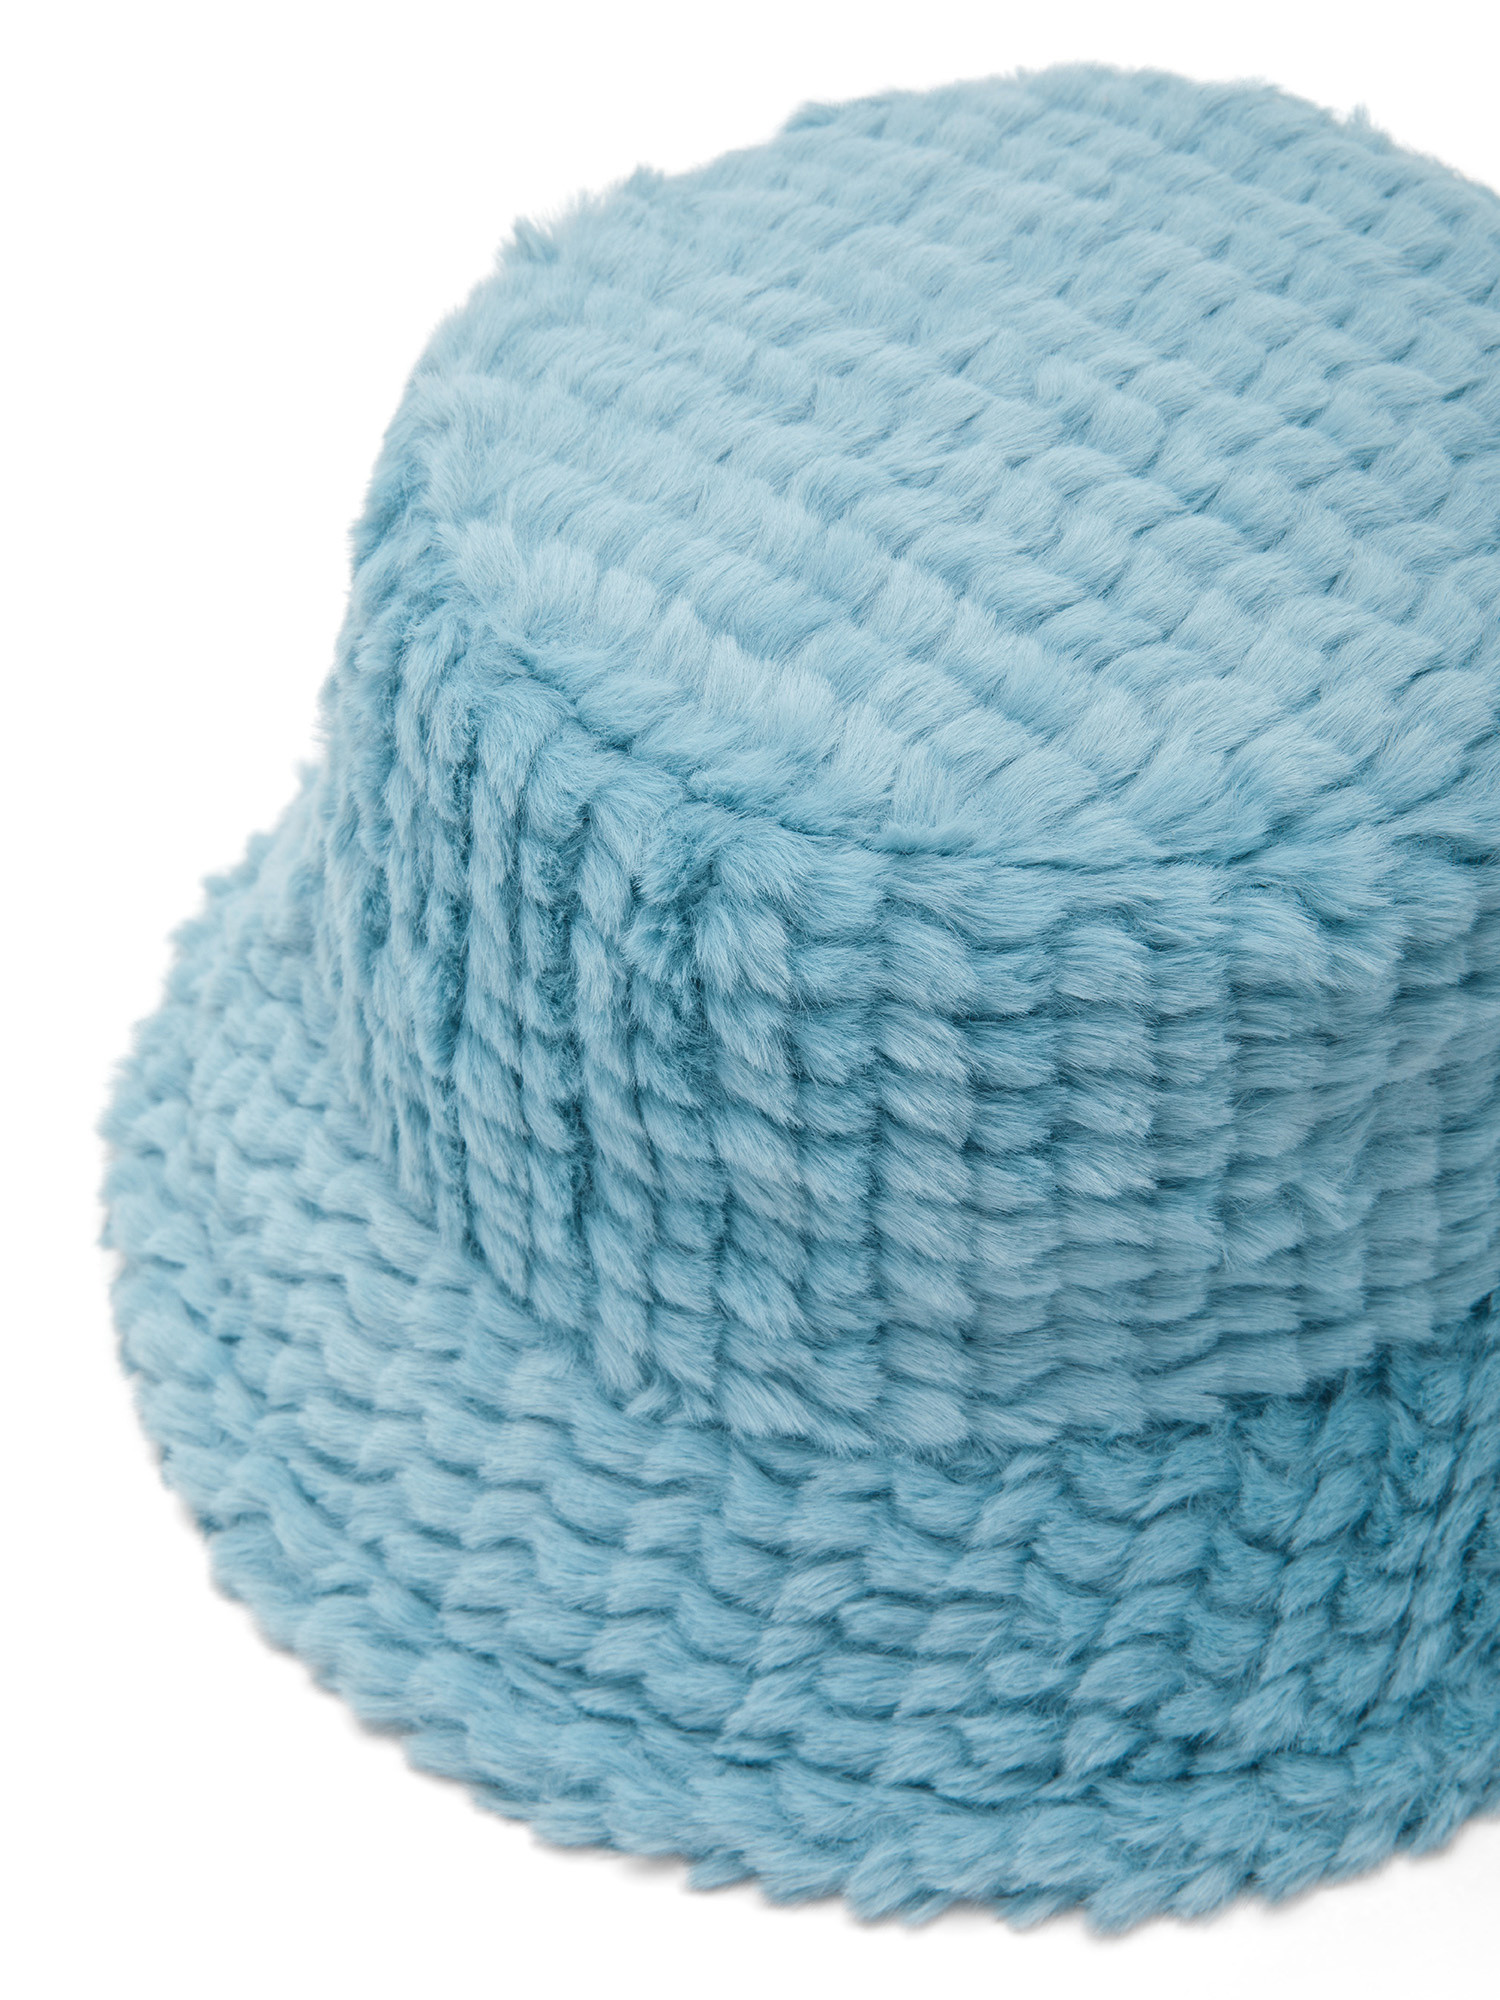 Koan - Cappello in ecopelliccia, Azzurro, large image number 1